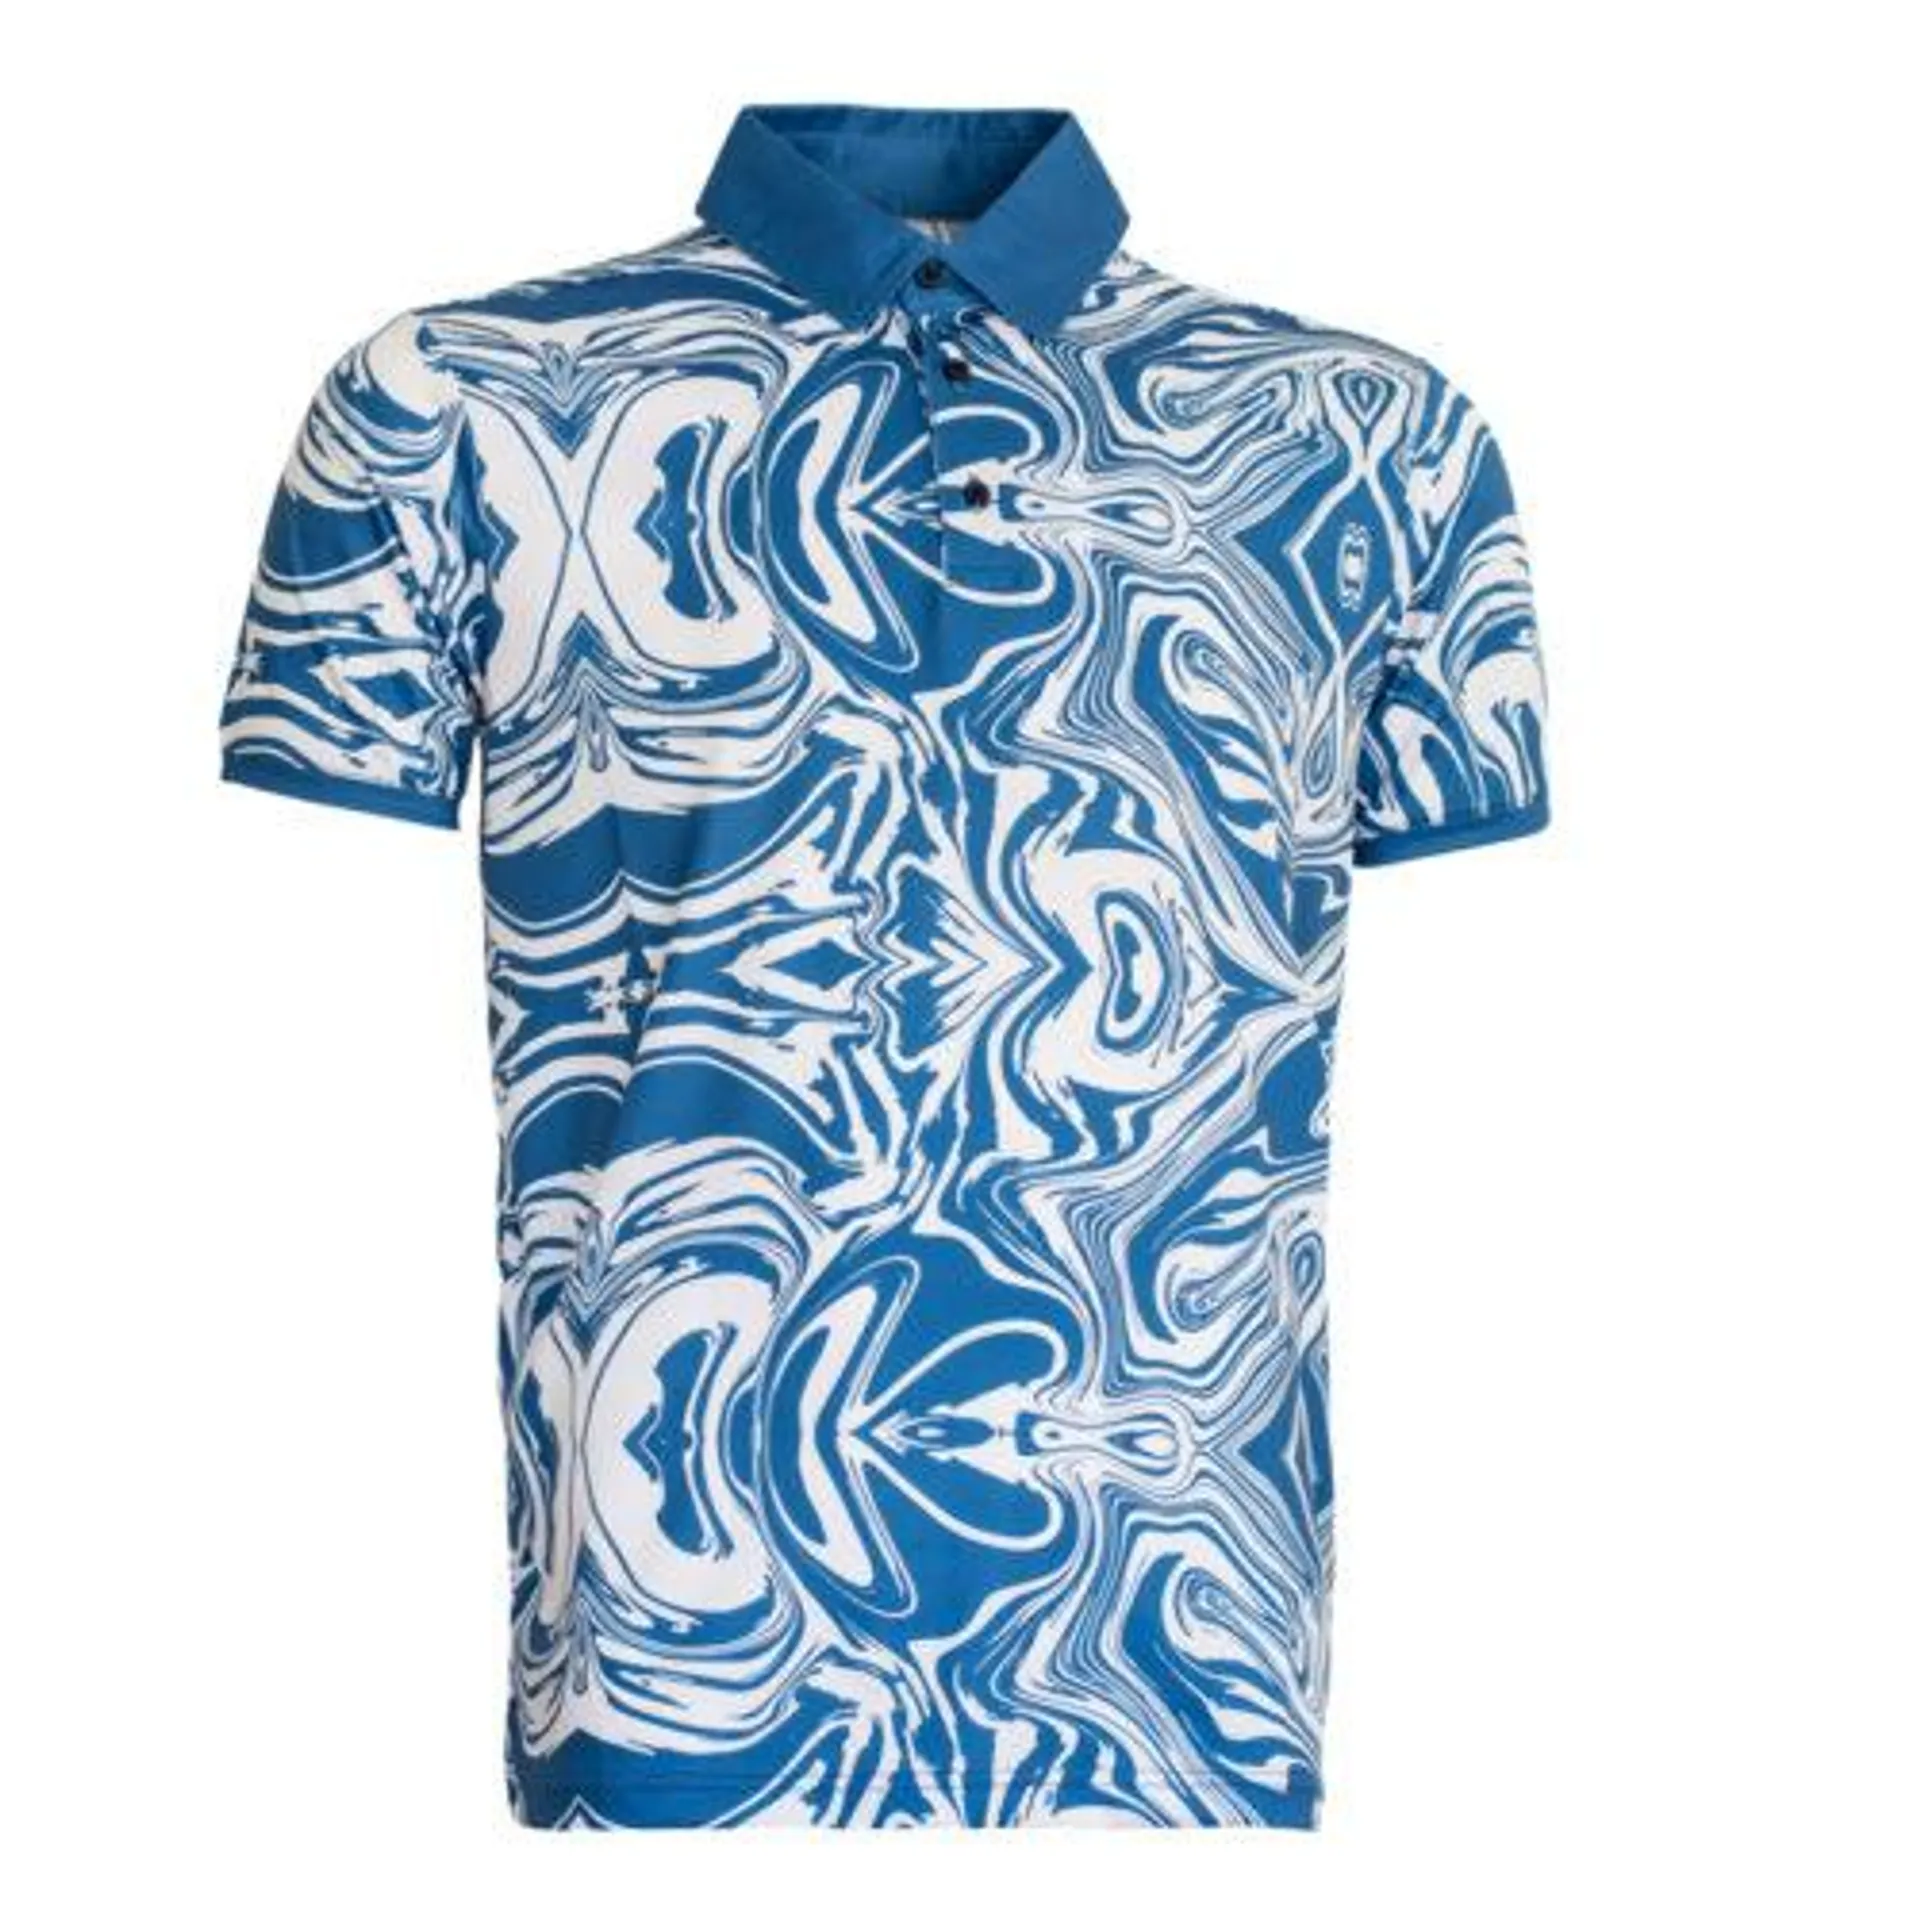 Cross Creek Swirl Shirt – Blue/White